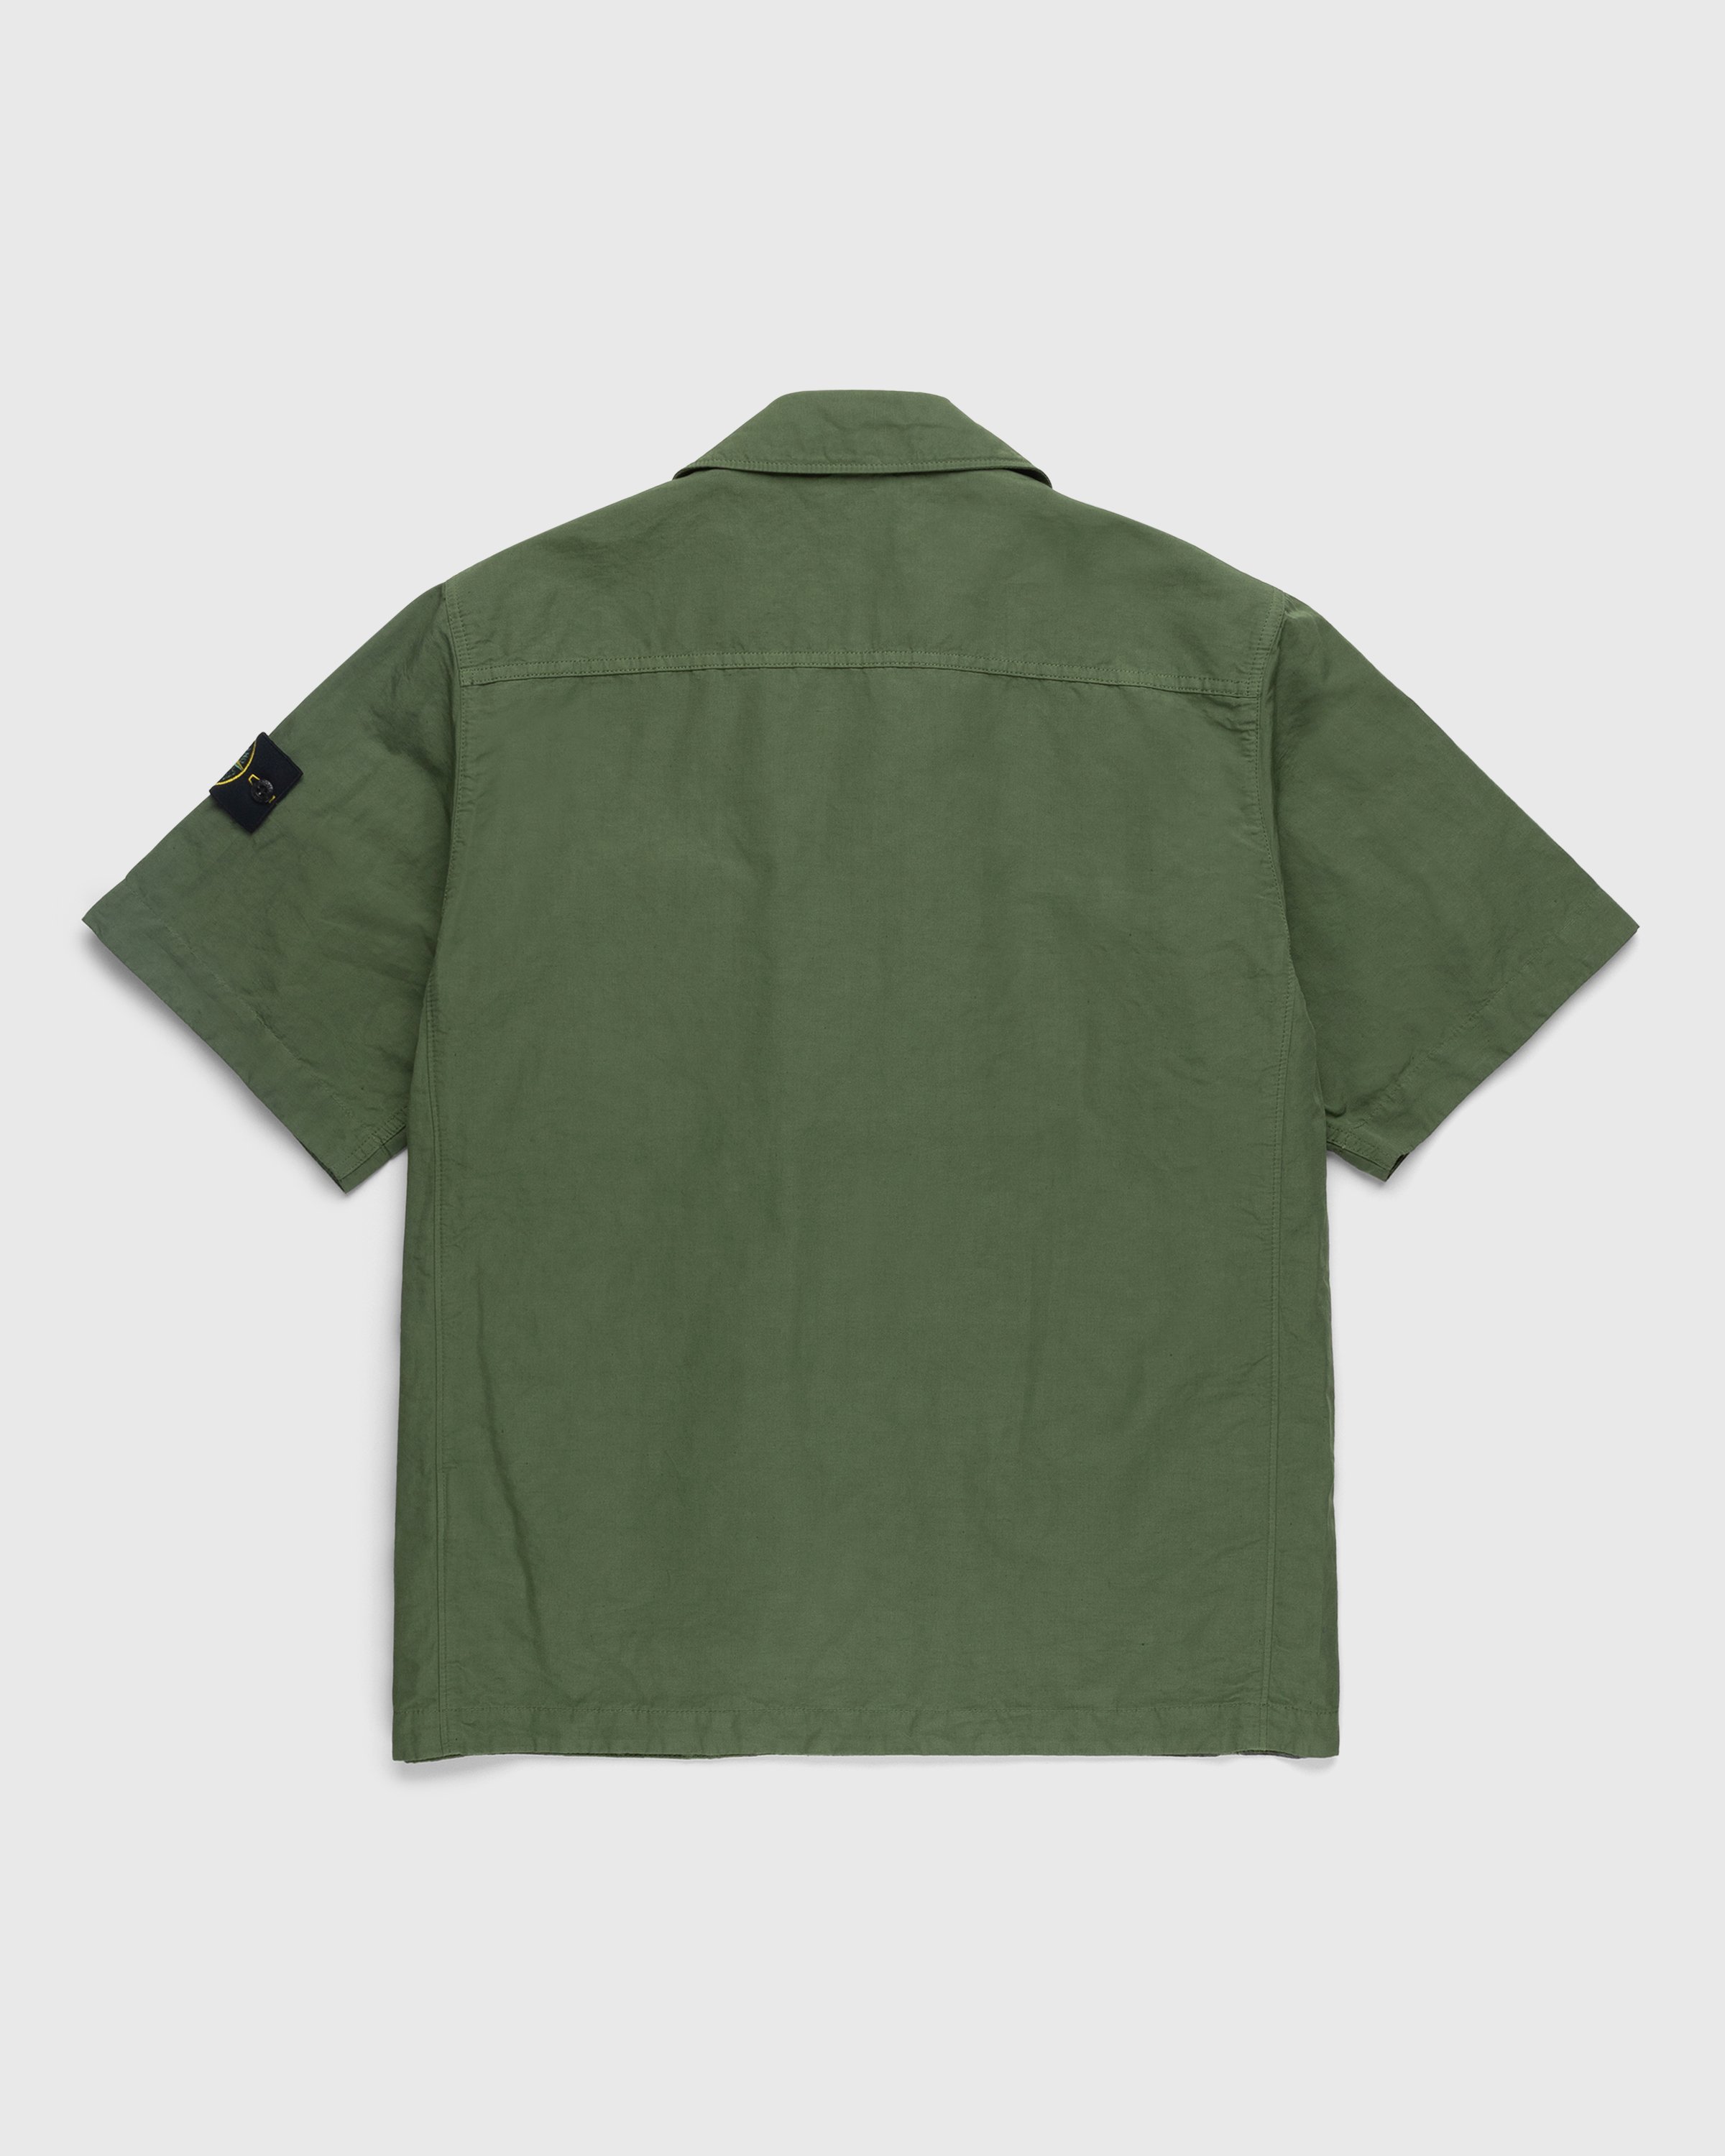 Stone Island - 42406 Garment-Dyed Shirt Jacket With Detachable Vest Olive - Clothing - Green - Image 2